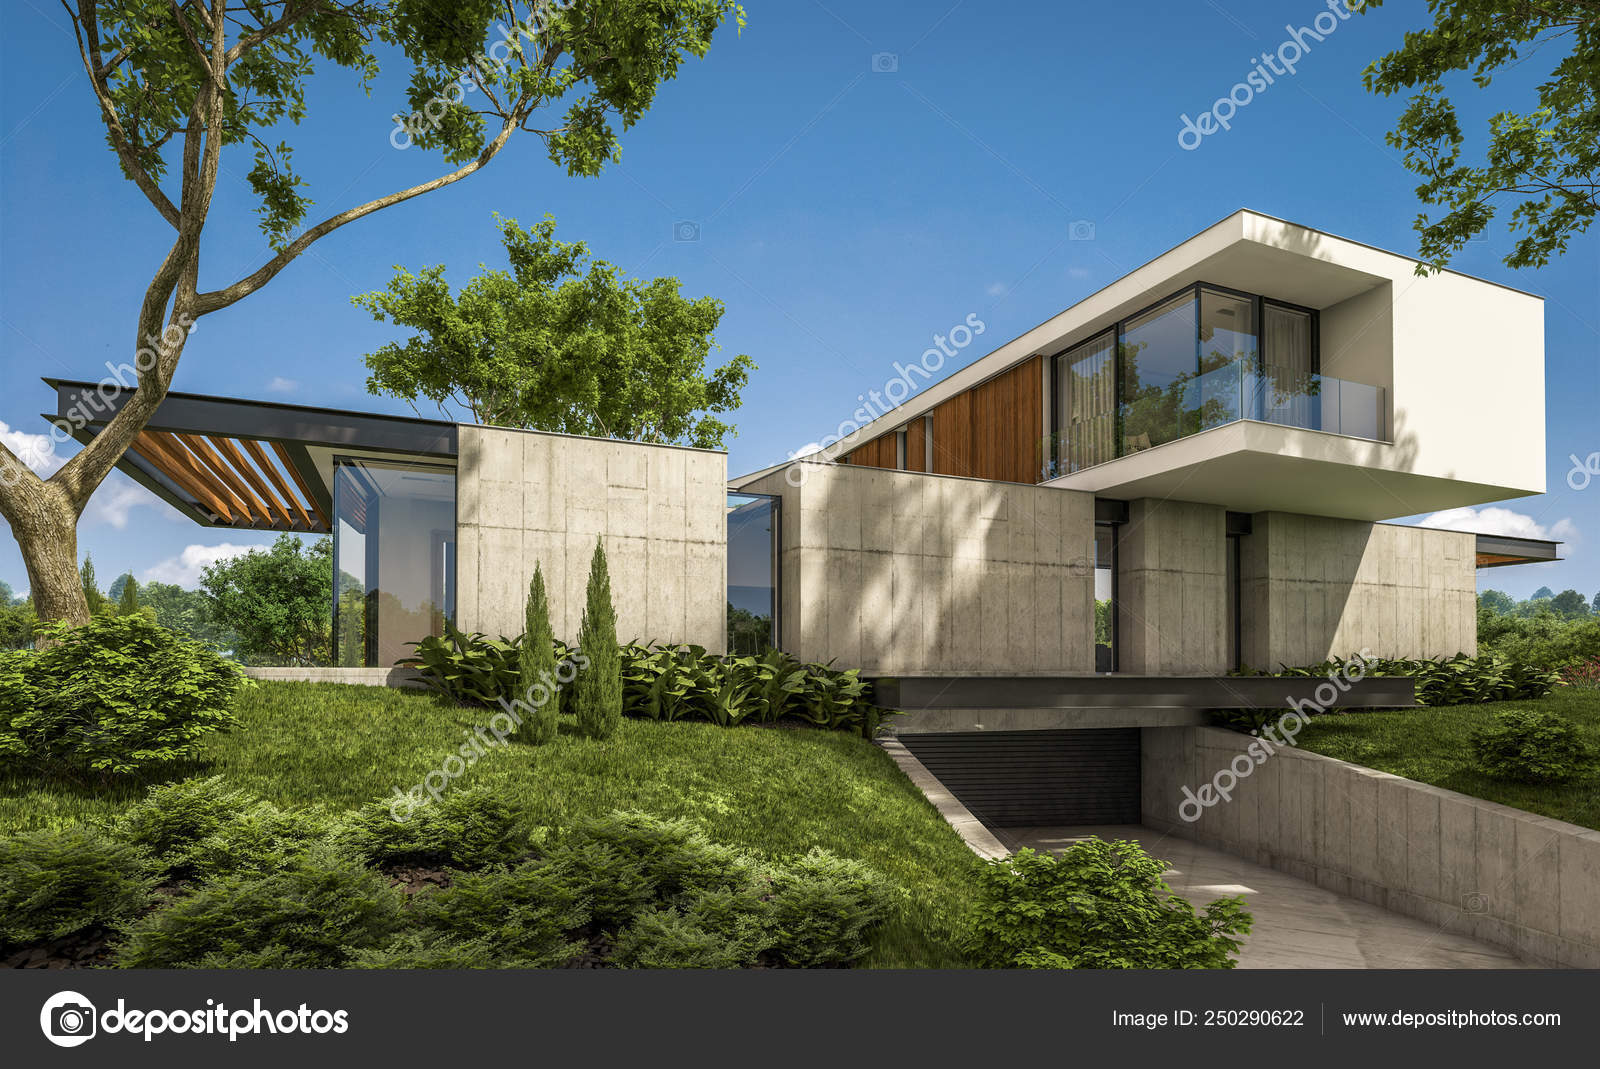 depositphotos stock photo 3d rendering of modern house